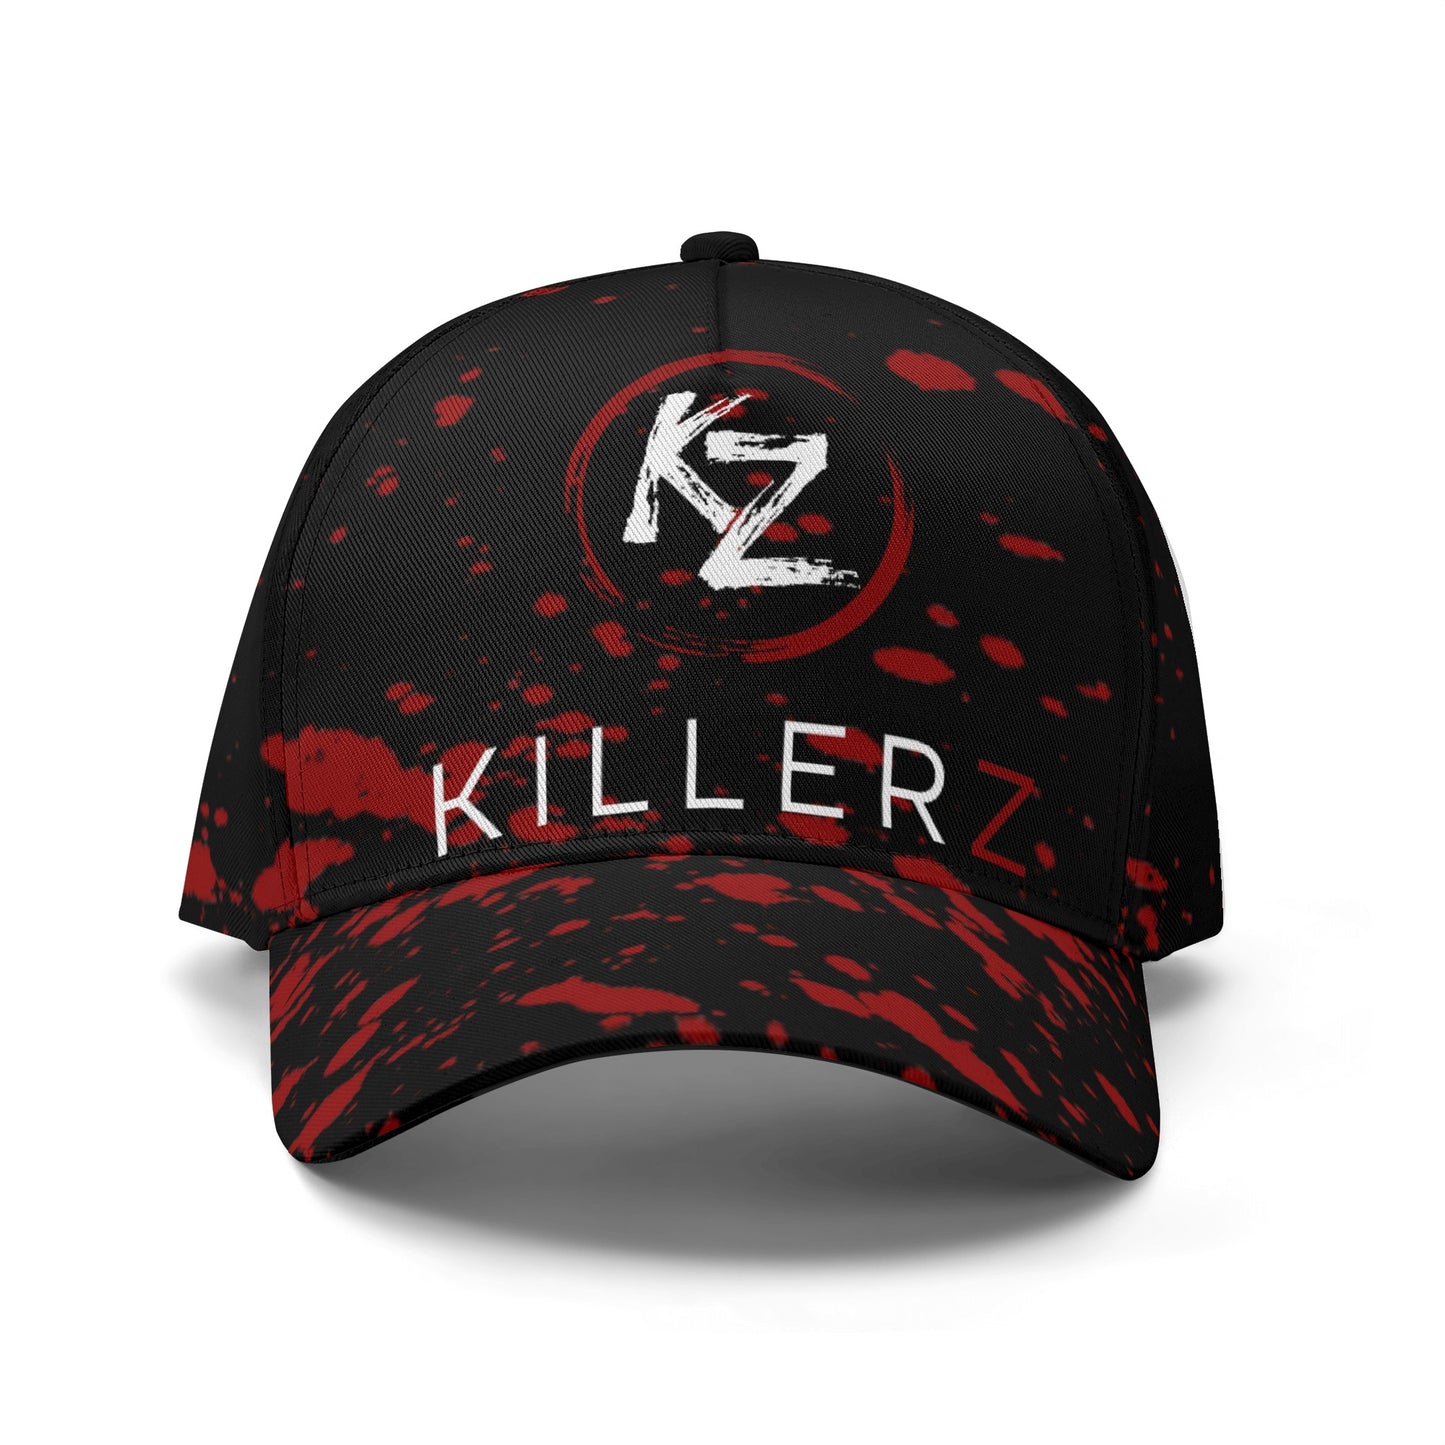 KILLERZ BASEBALL CAP